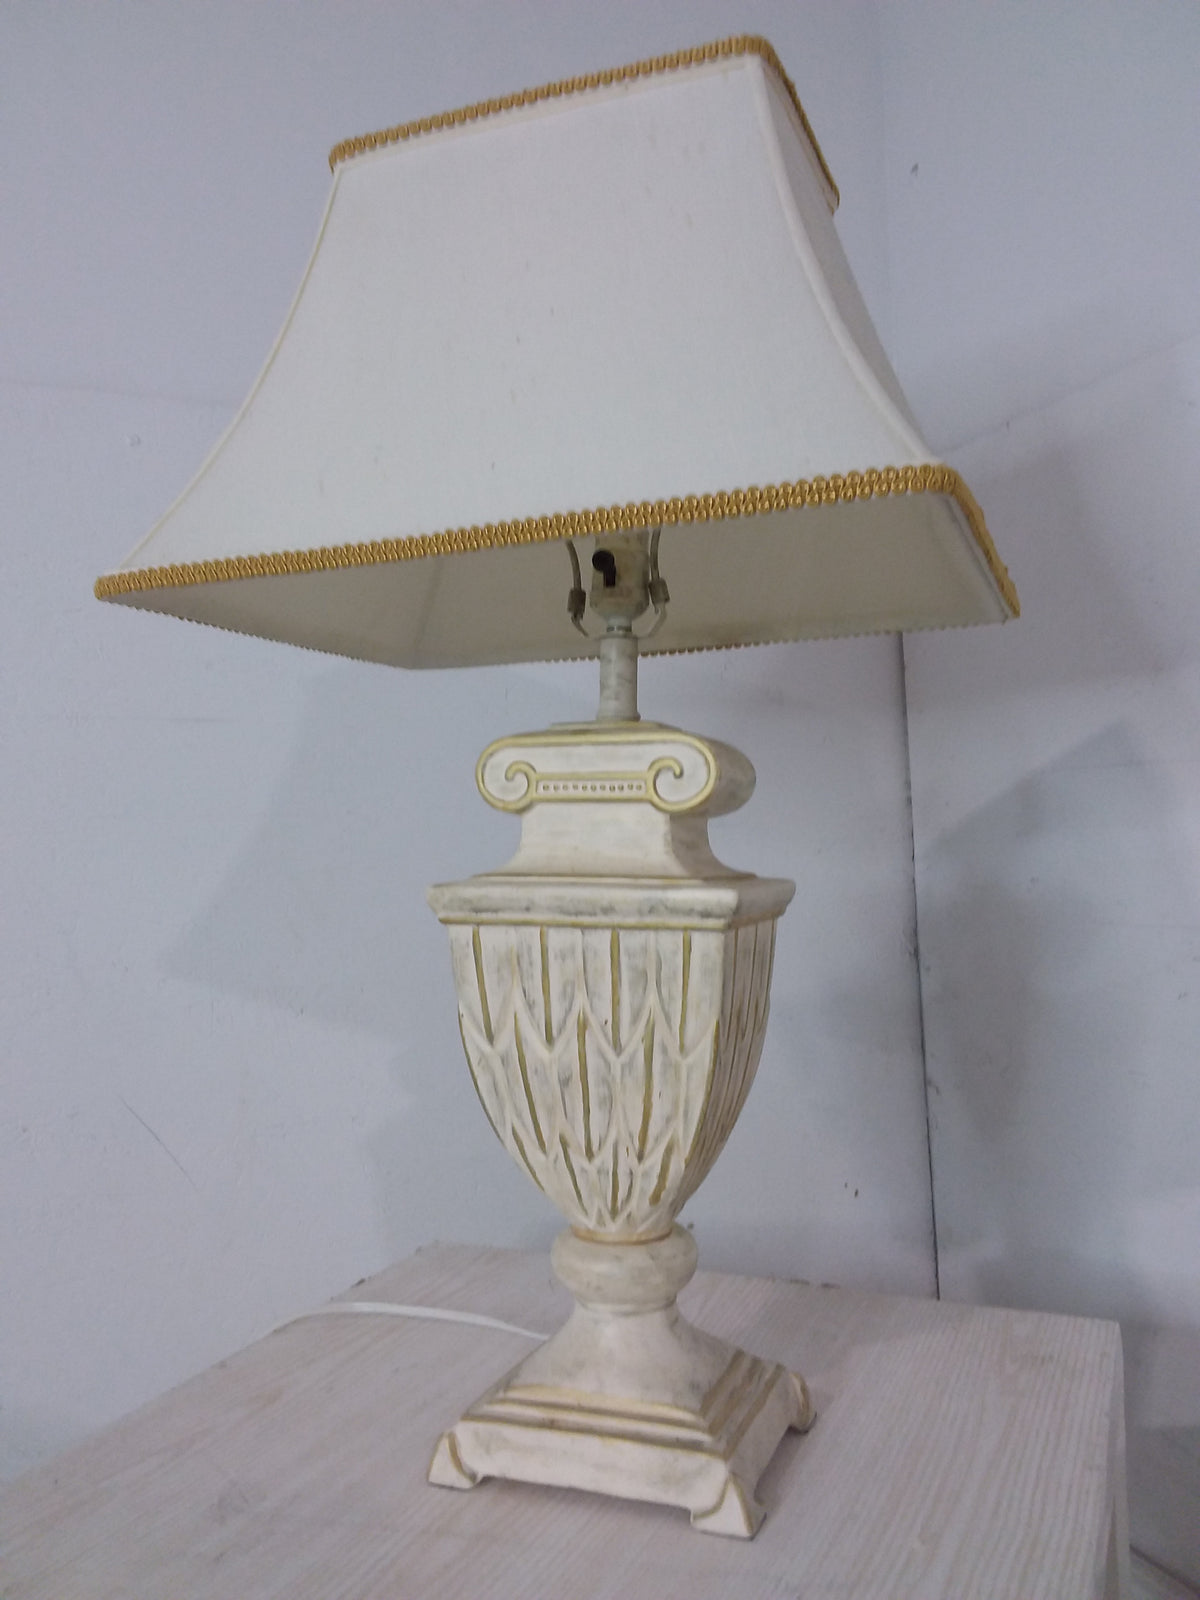 Classical Design Table Lamp